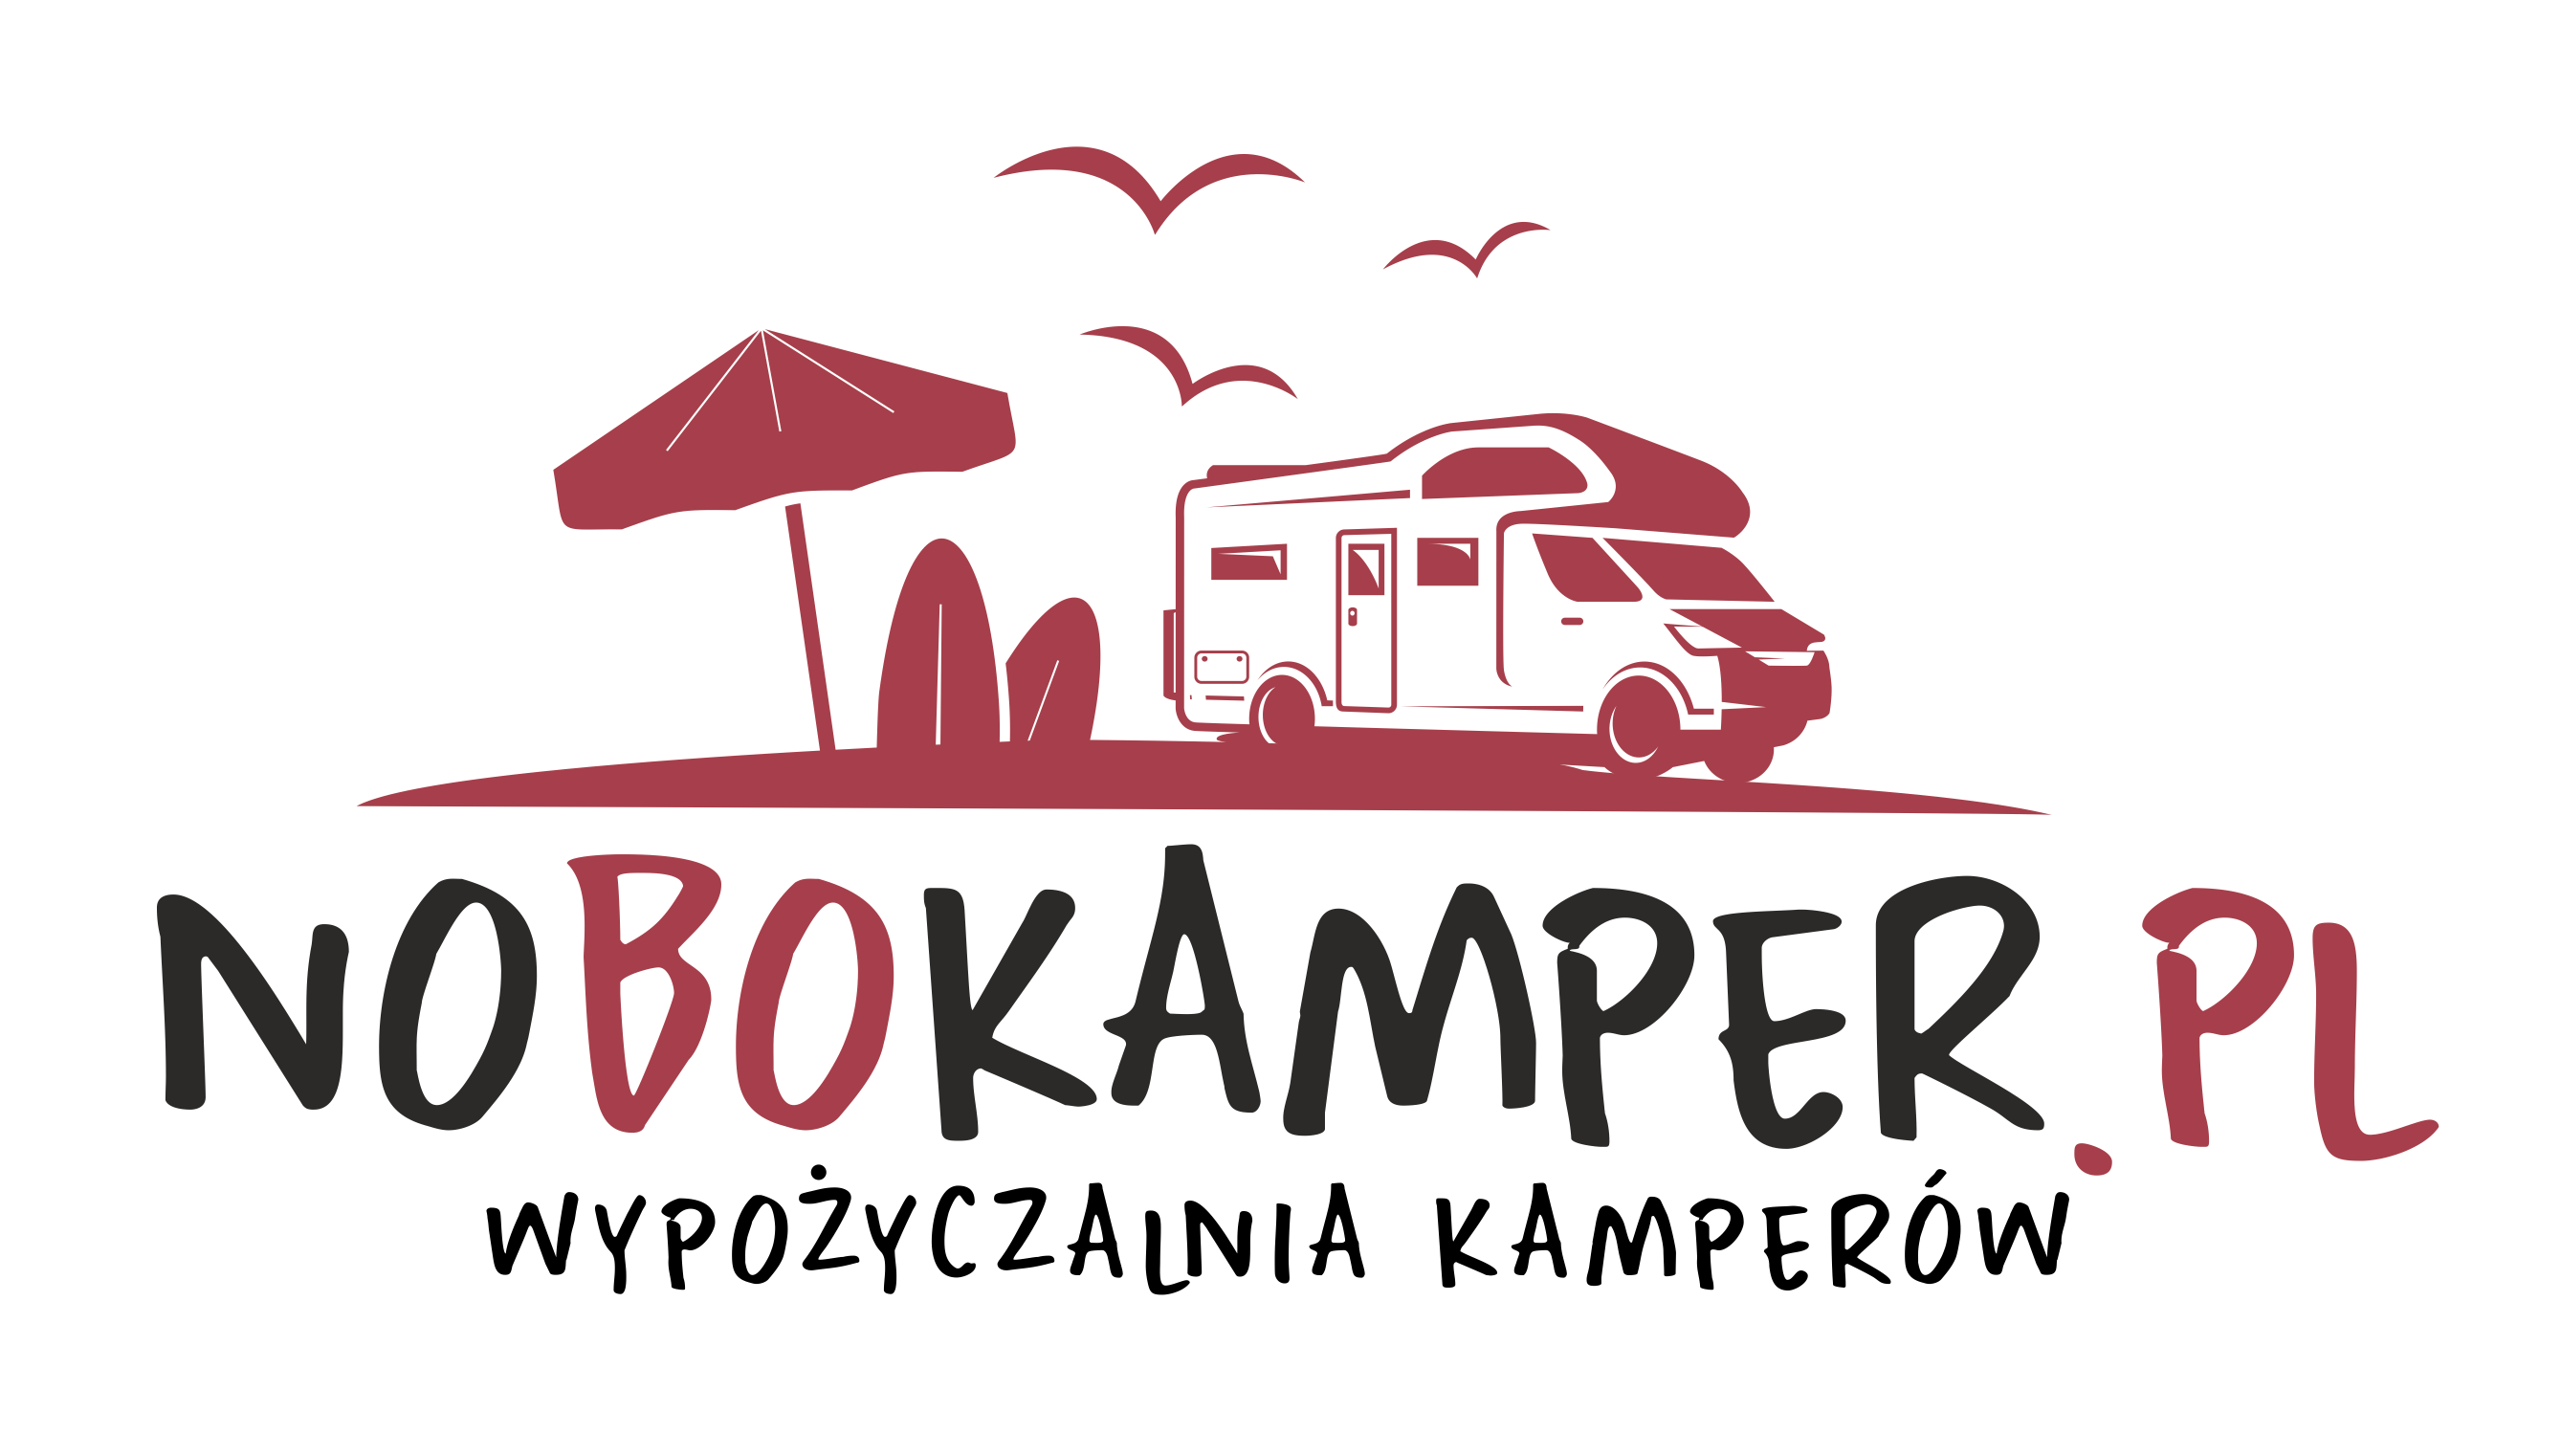 NoBoKamper